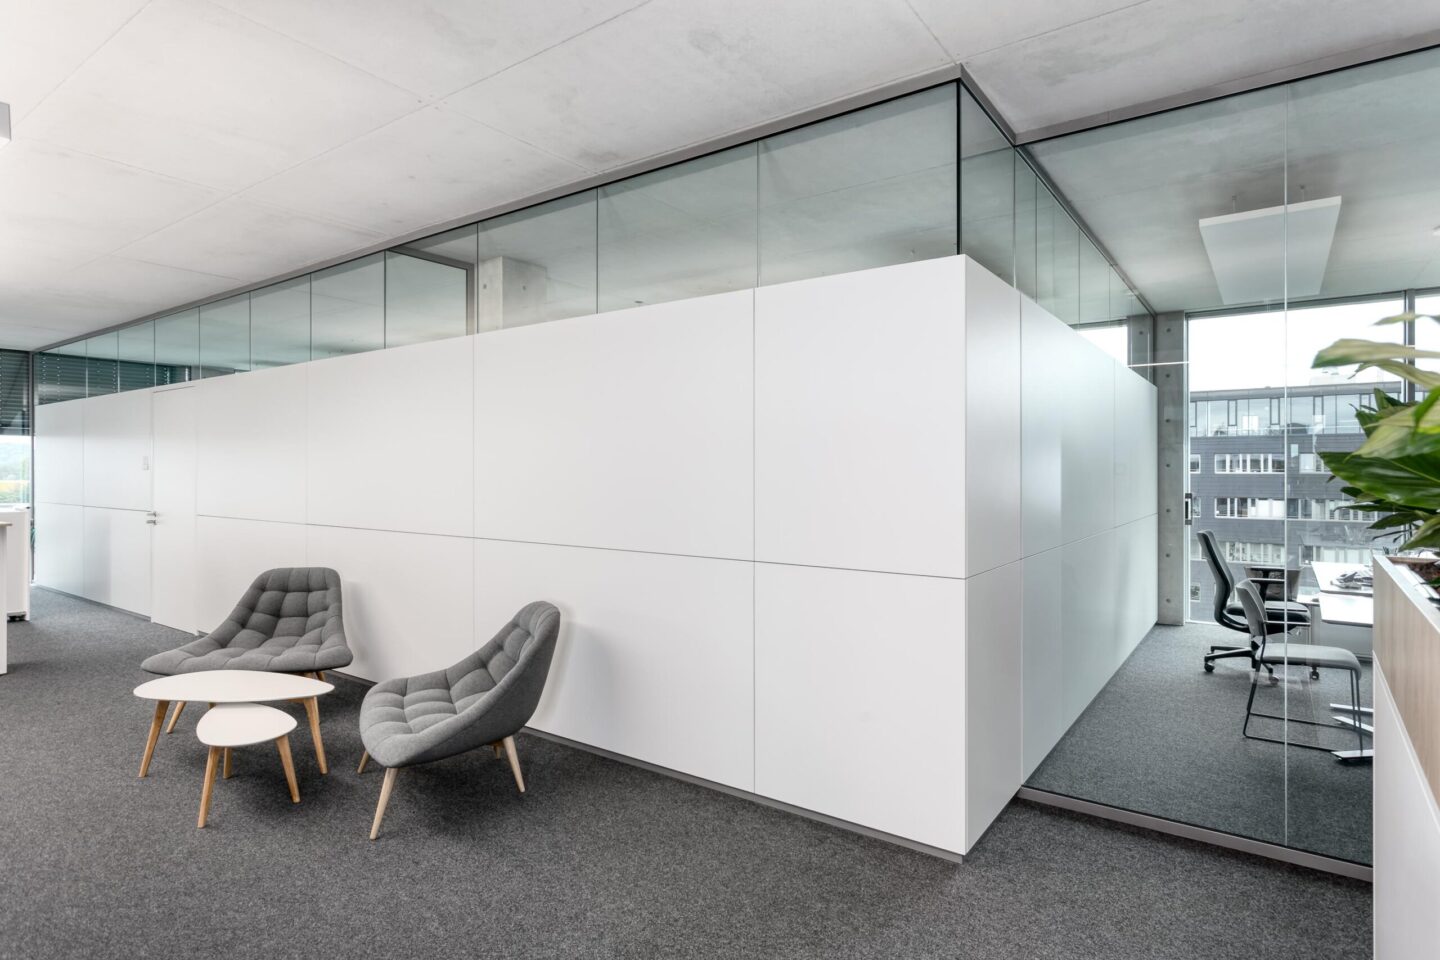 feco │ intermediate office walls │ fecoplan all-glass construction